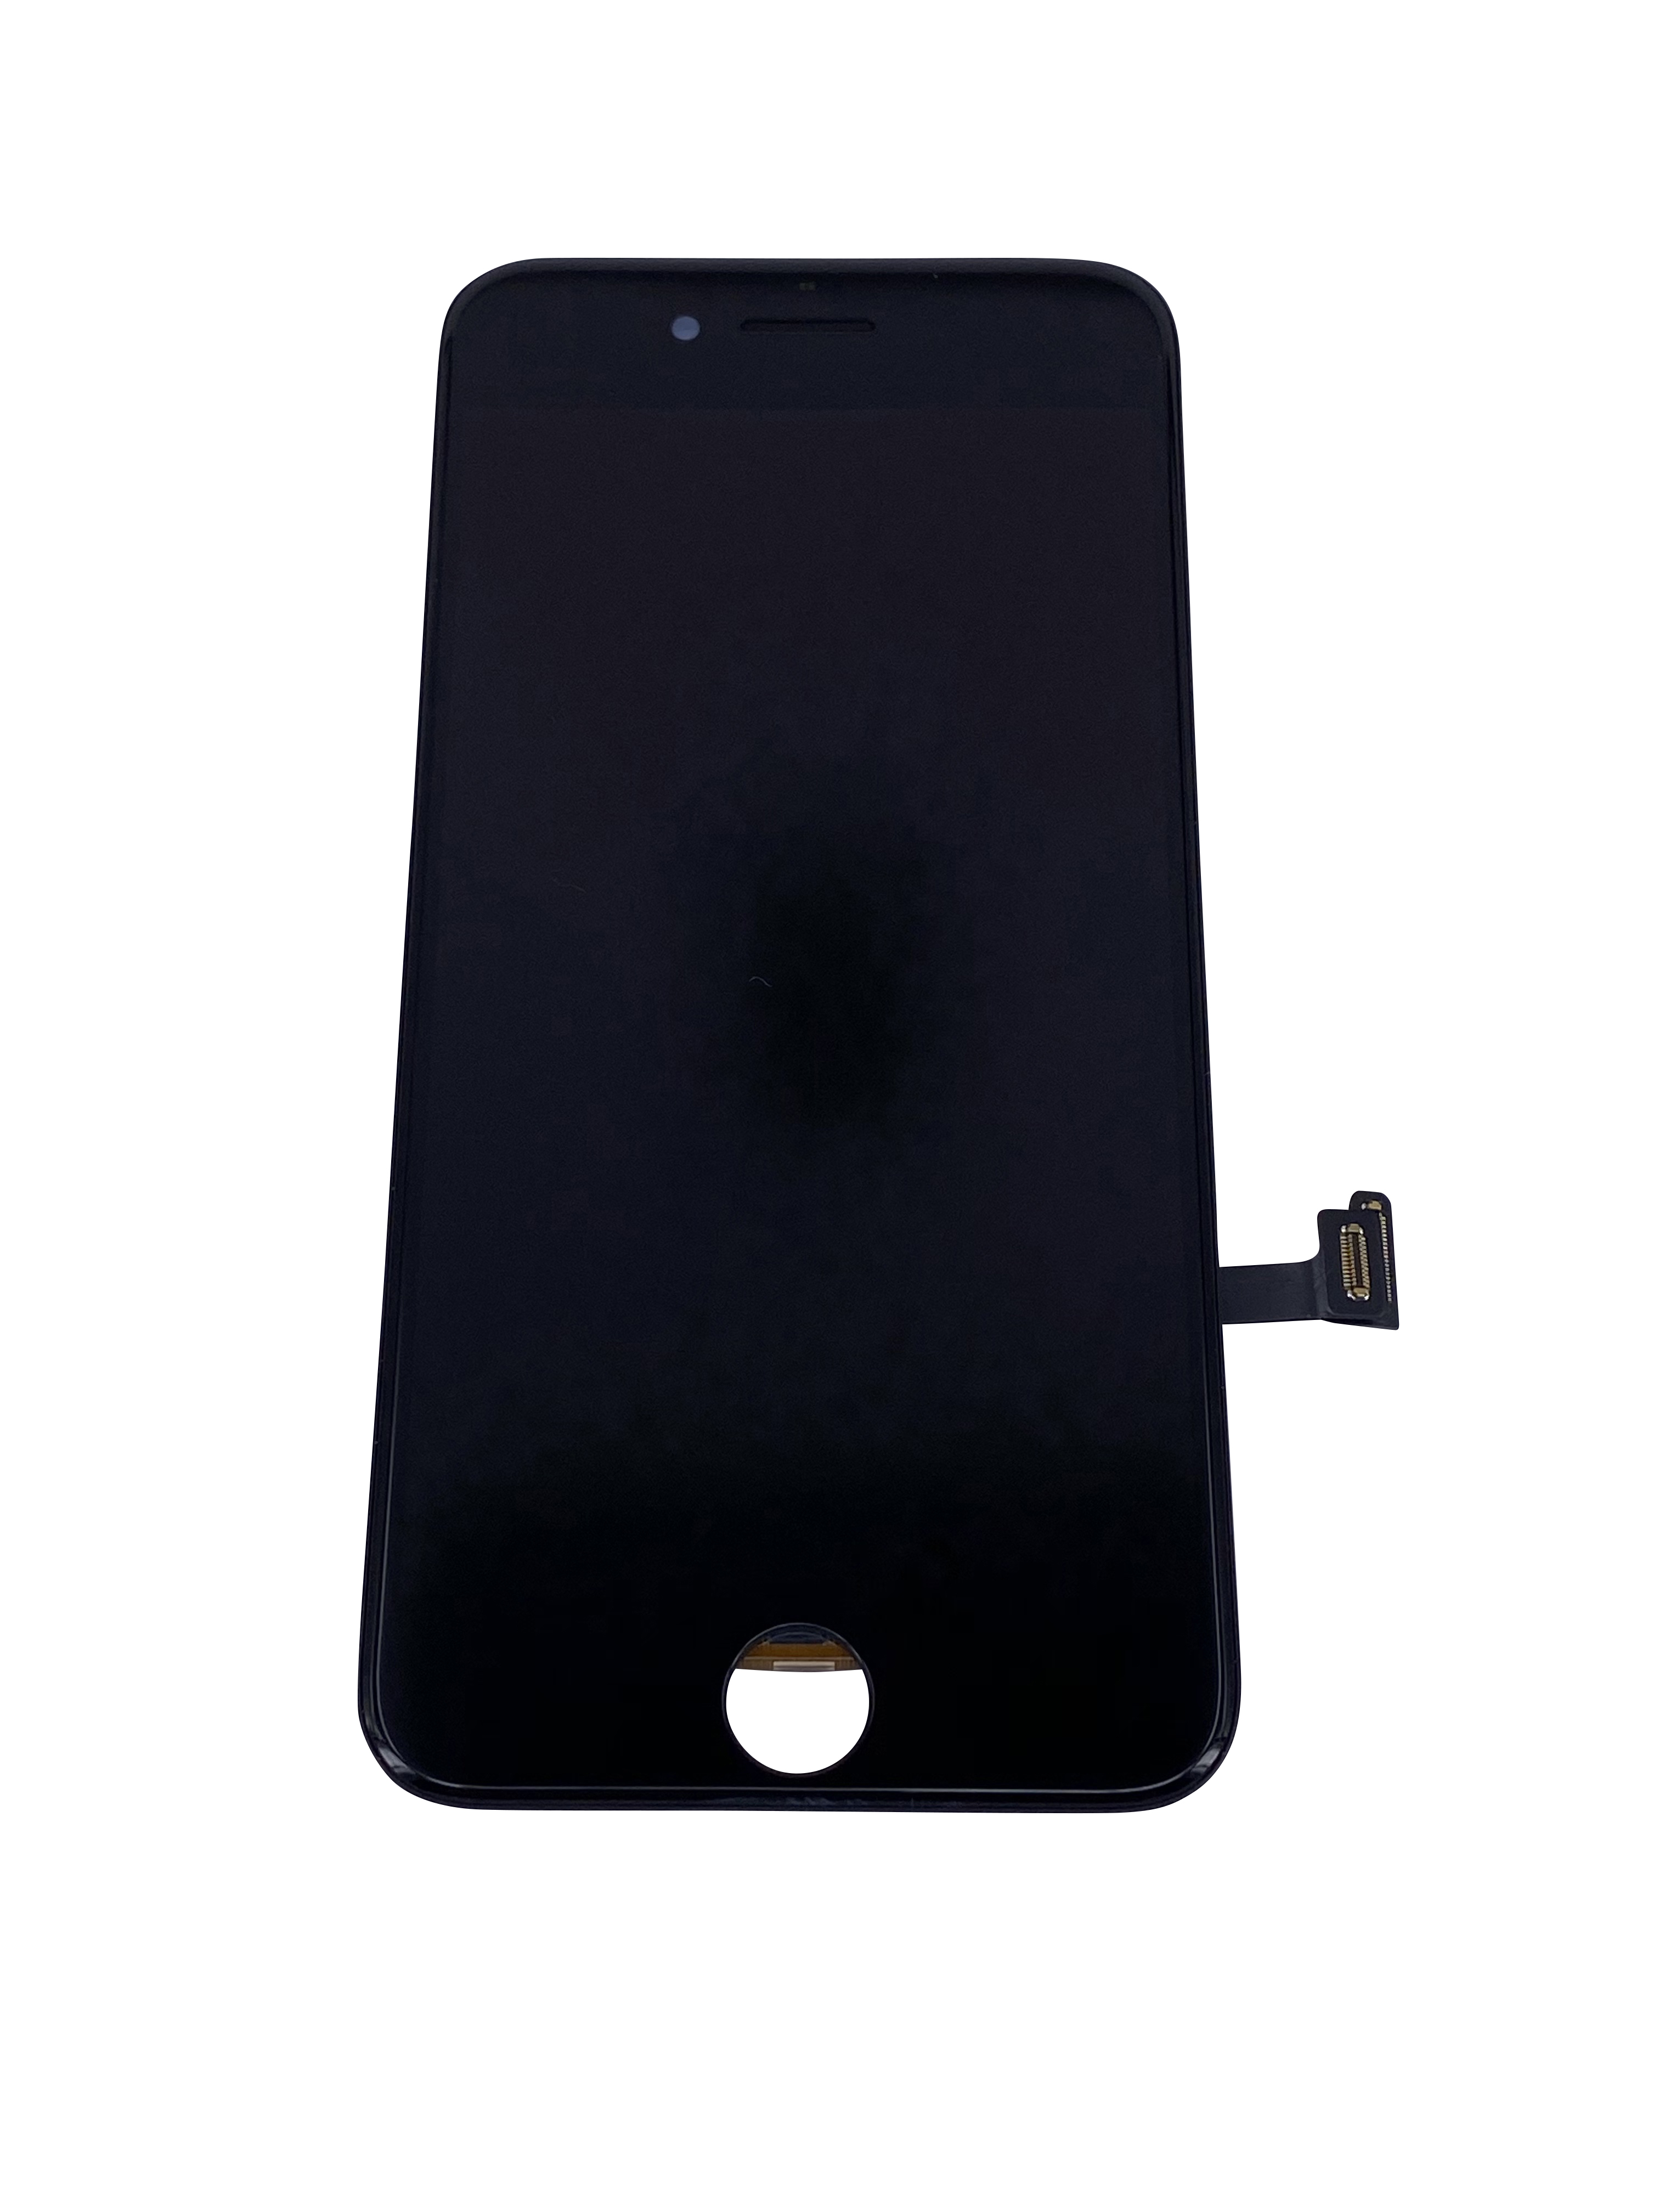 iPhoneSE(第2世代/第3世代) INCELLサードパーティ製品 LCD iPhone8使用可